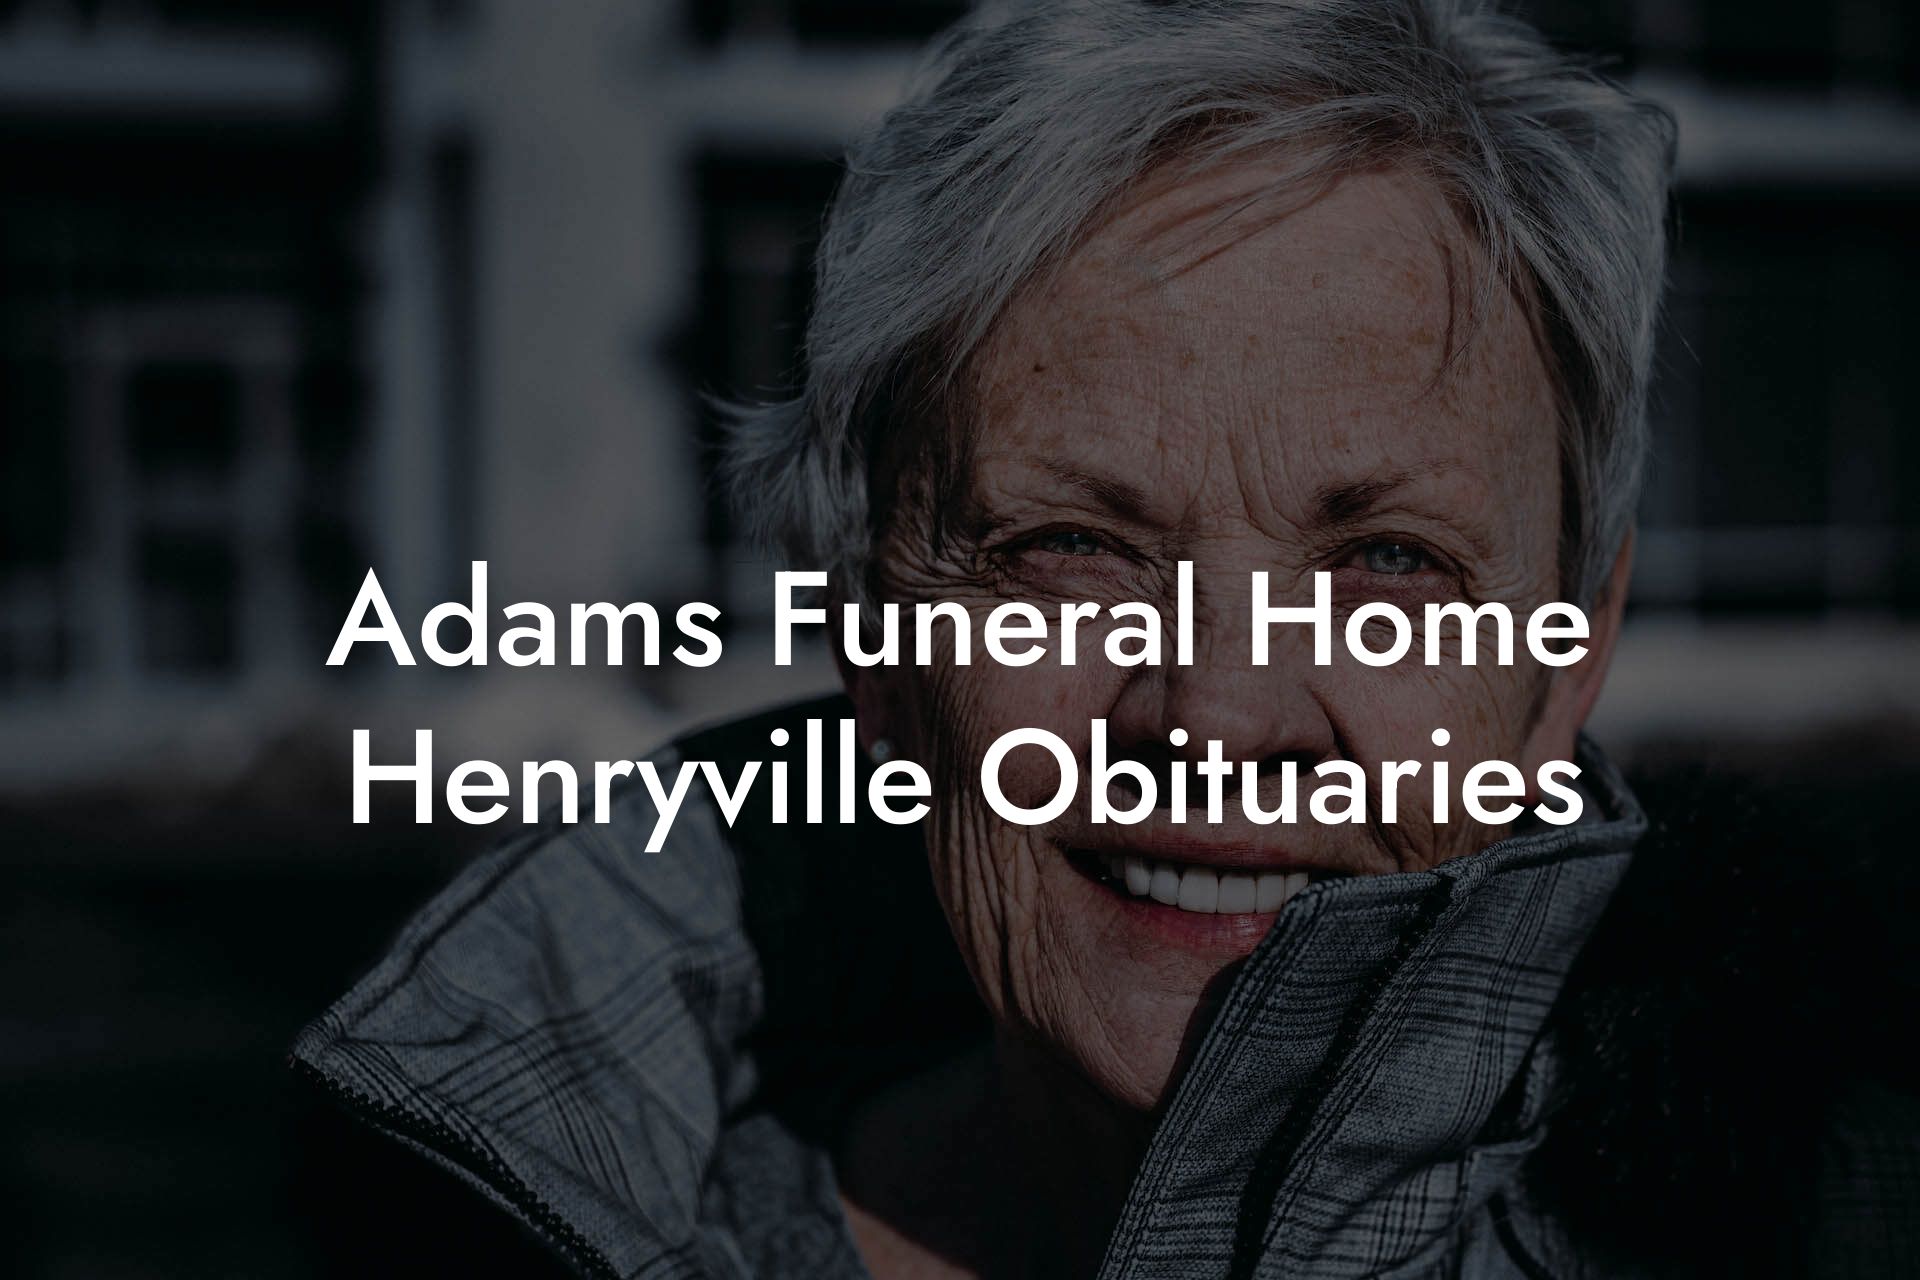 Adams Funeral Home Henryville Obituaries